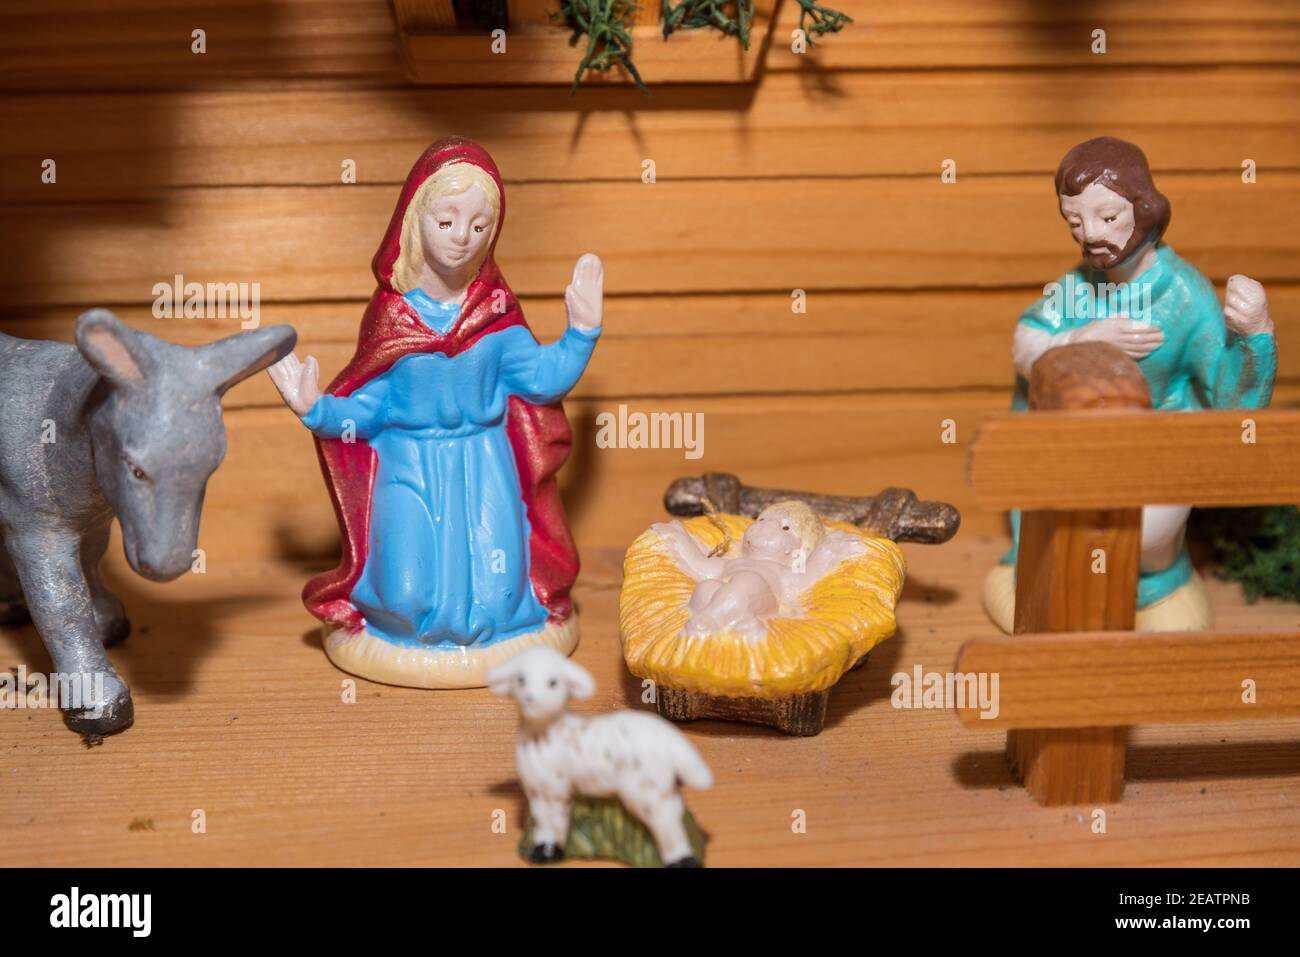 Nativity scene - detail of the birth of Jesus Stock Photo